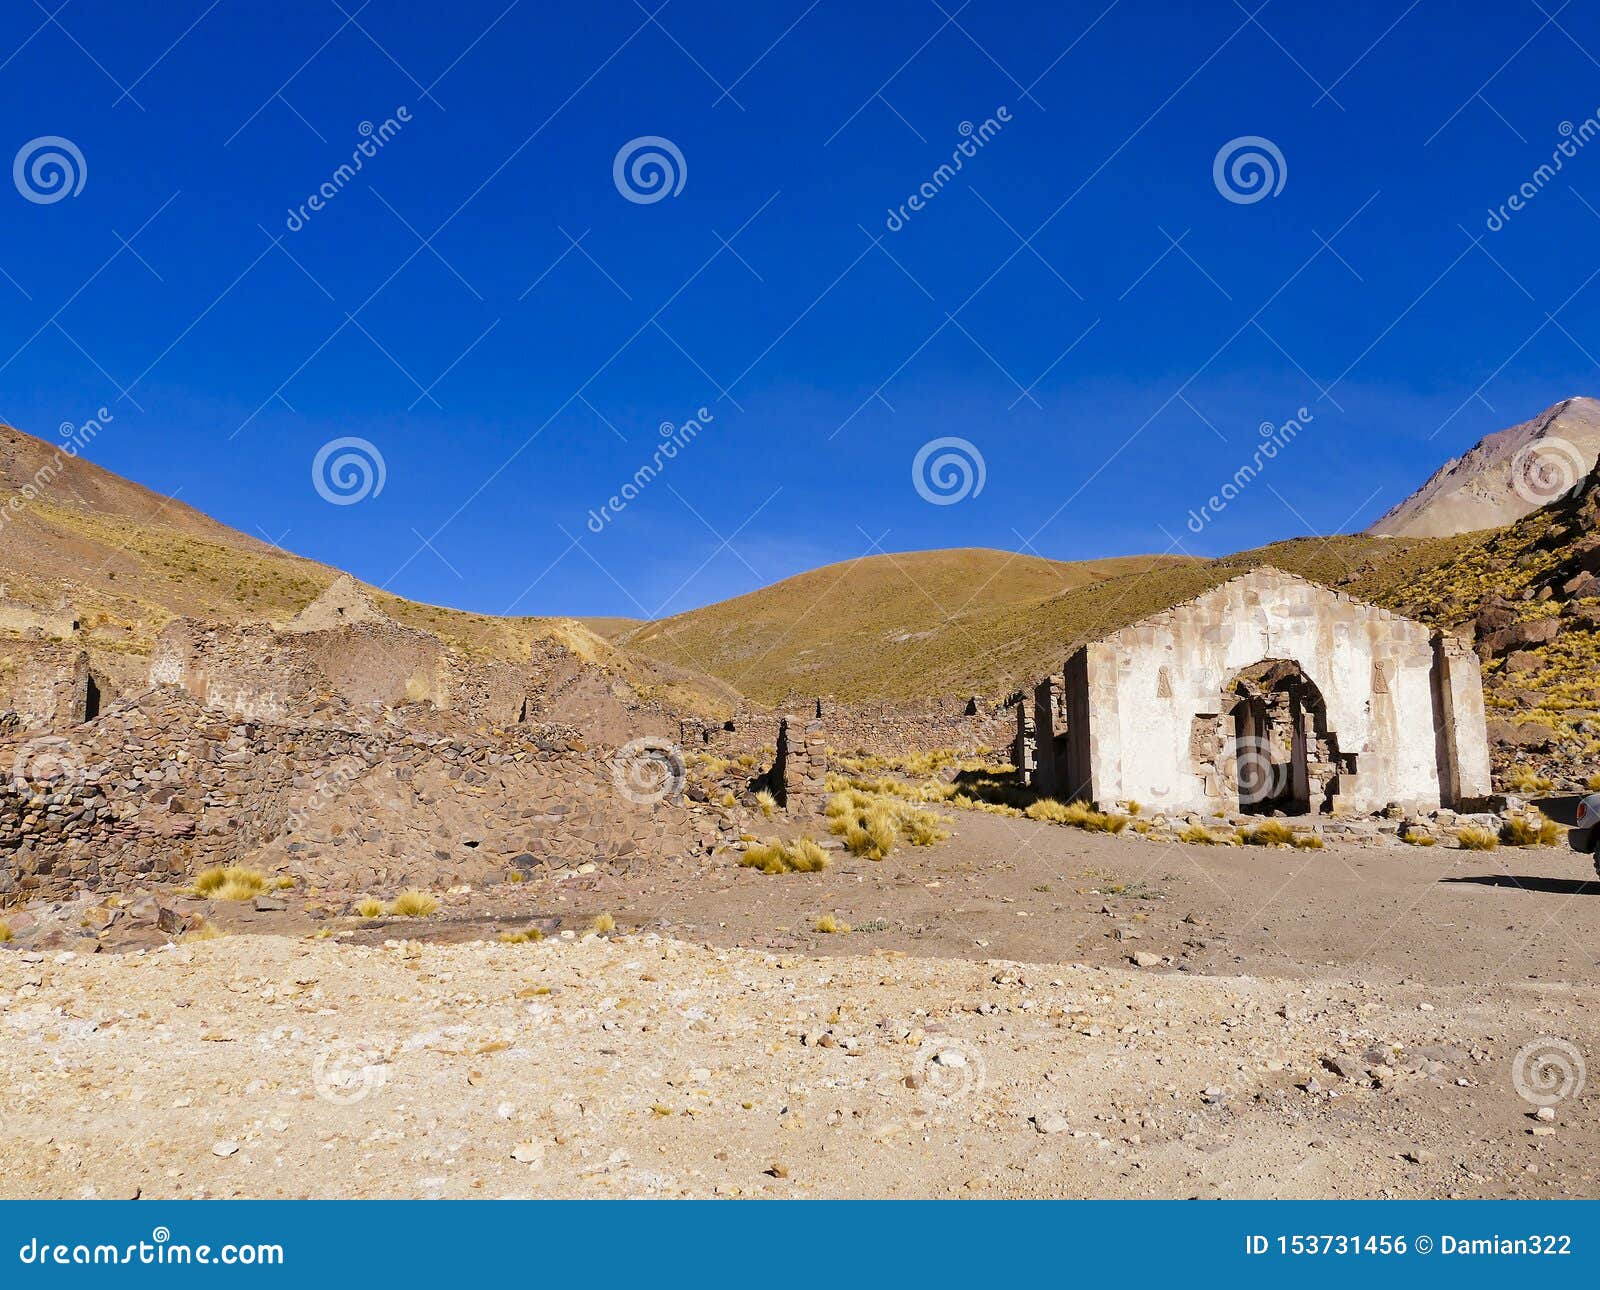 ruins of a former mining town pueblo fantasma, southwestern bolivia